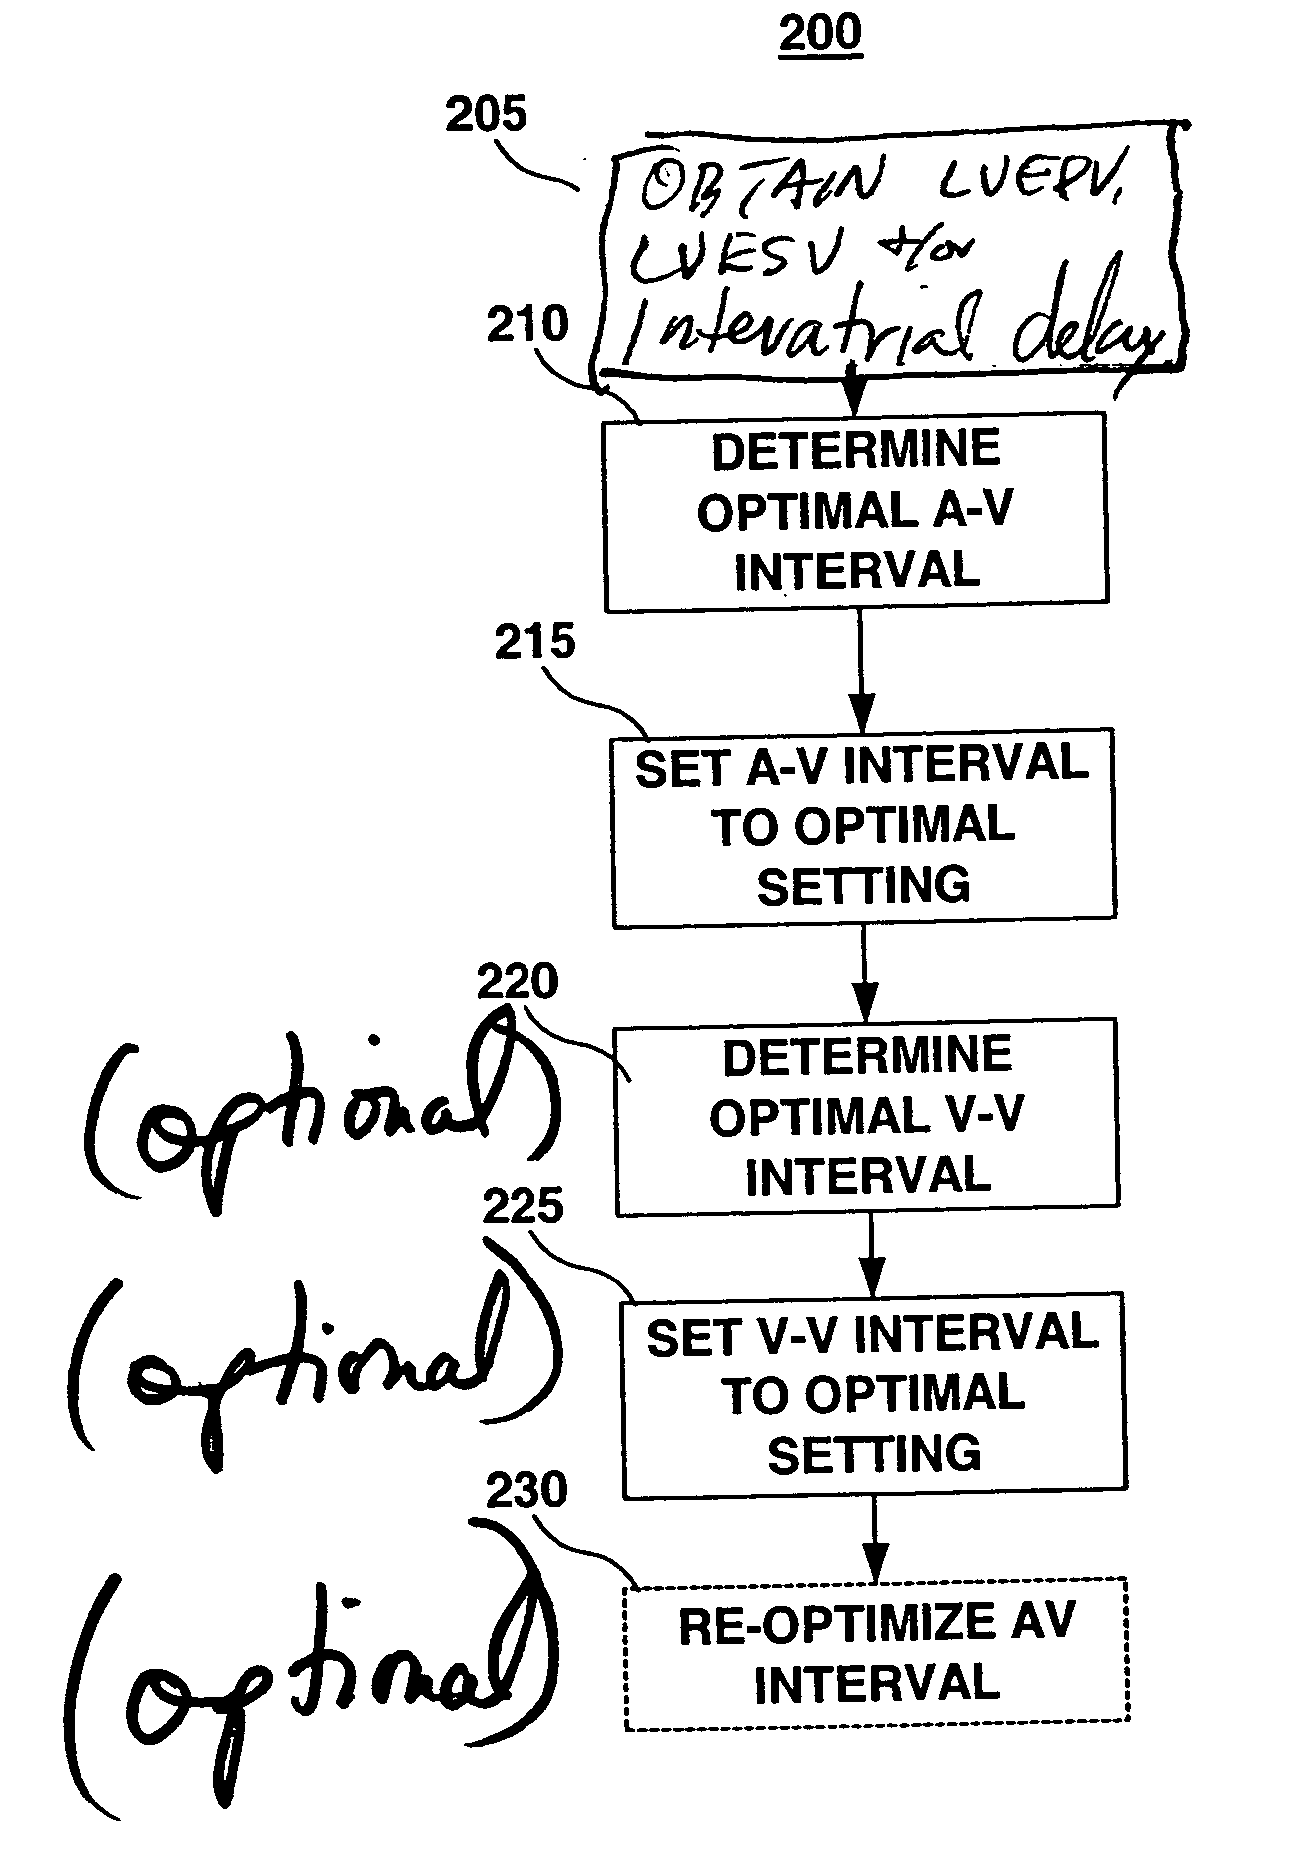 Method and apparatus for determining an efficacious atrioventricular delay interval